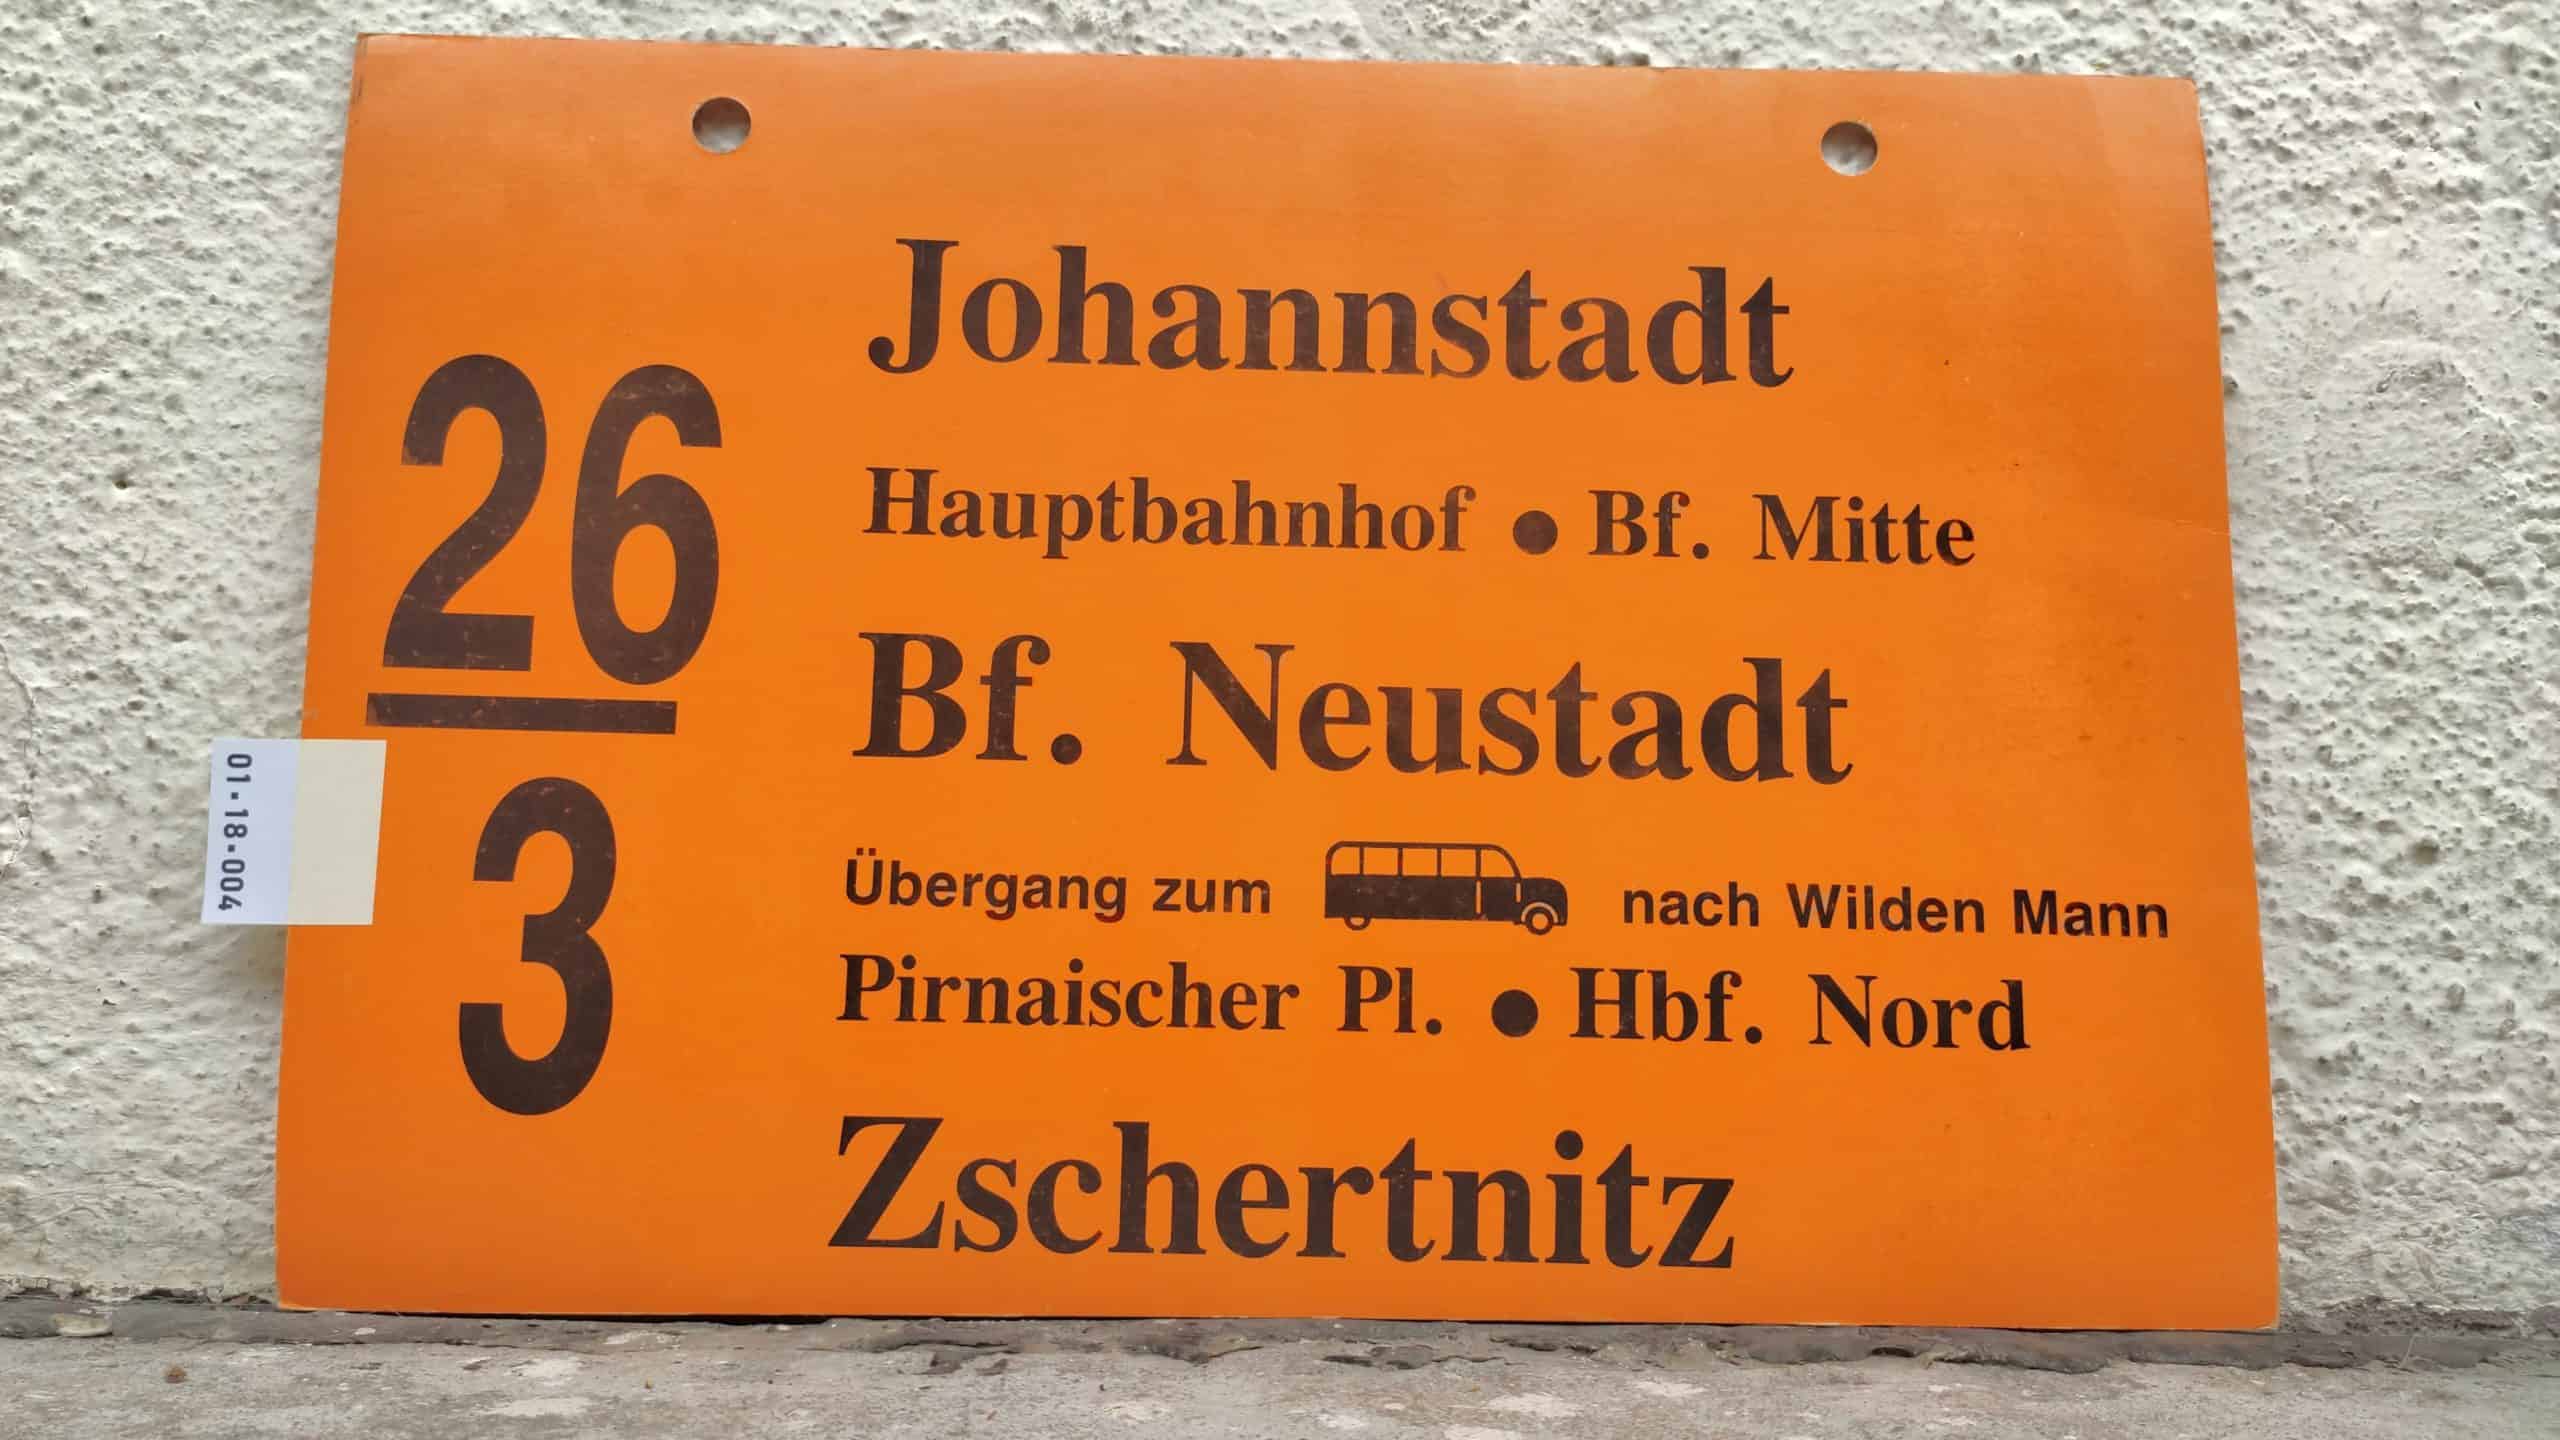 26/3 Johannstadt – Zschertnitz